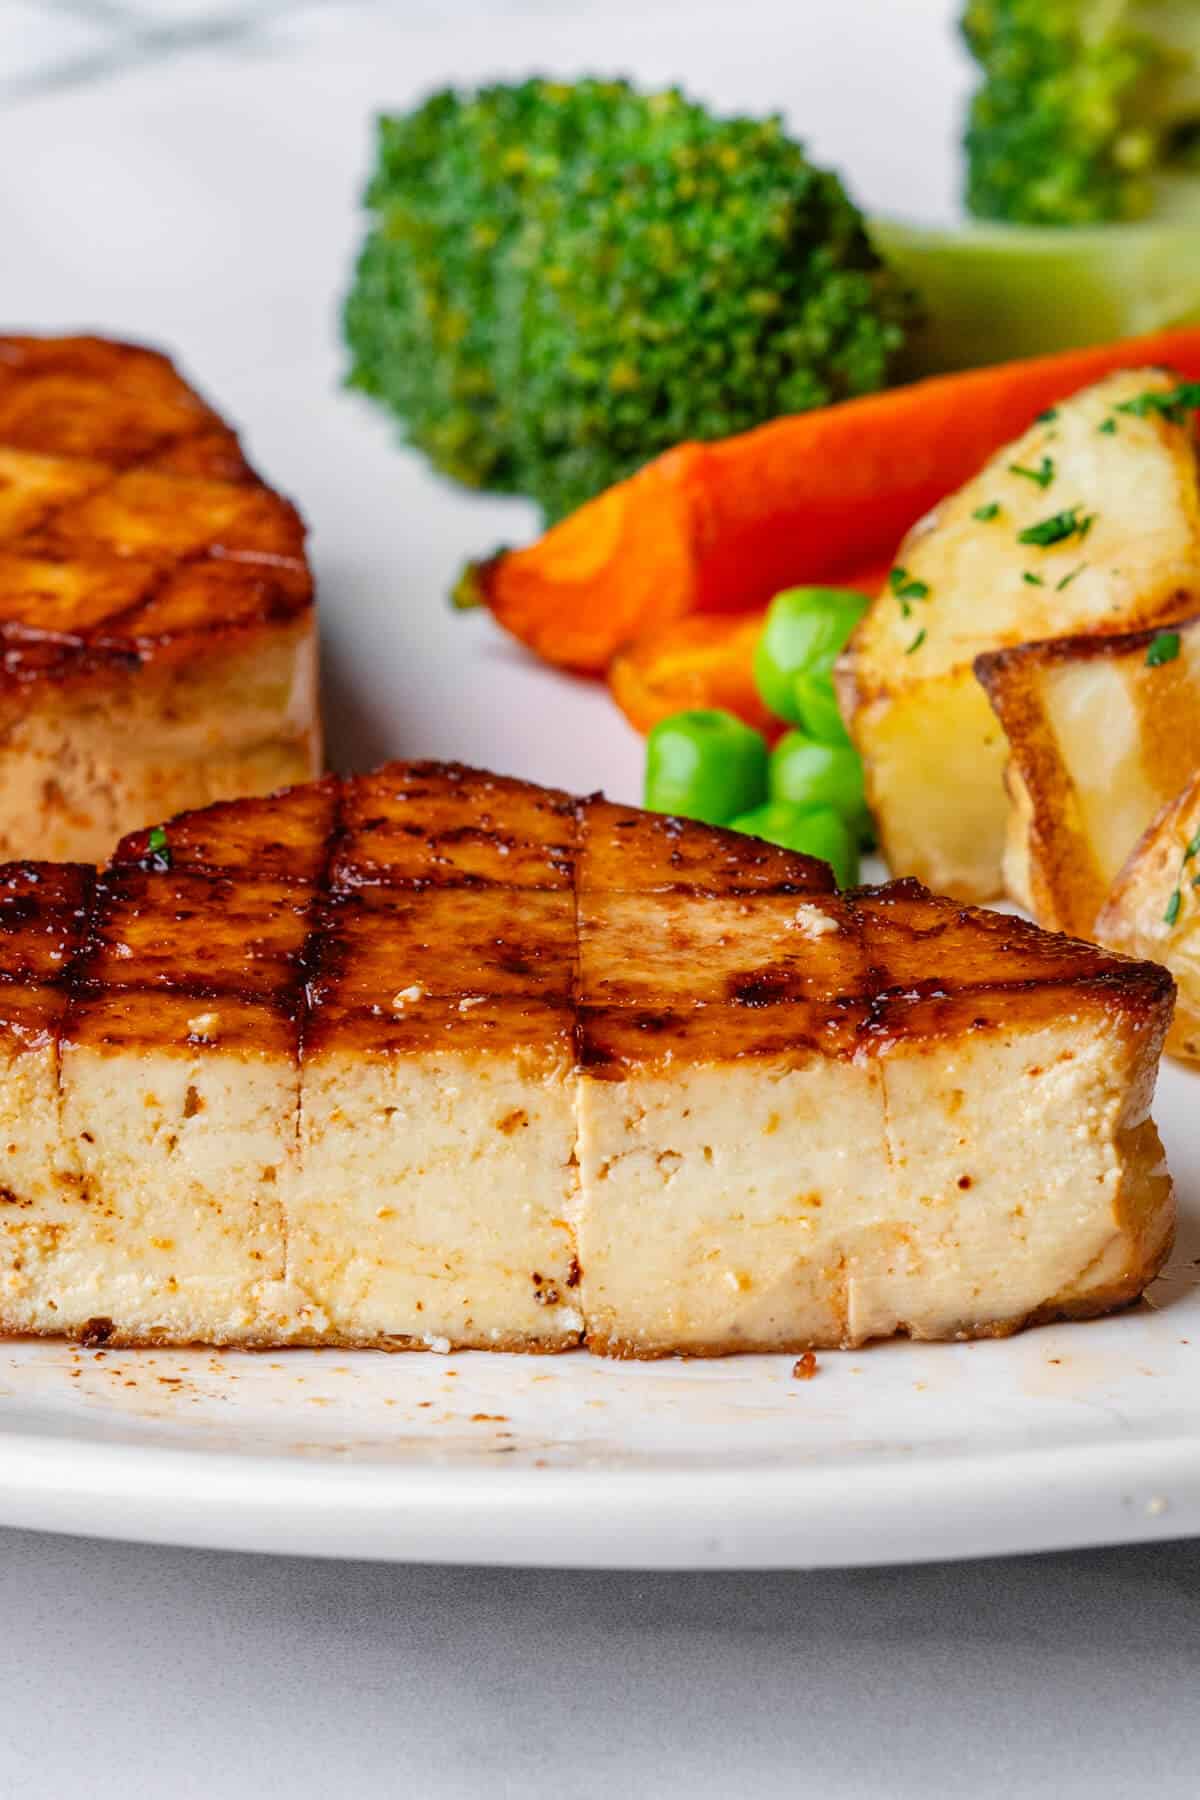 Tofu steak sliced to show the inside